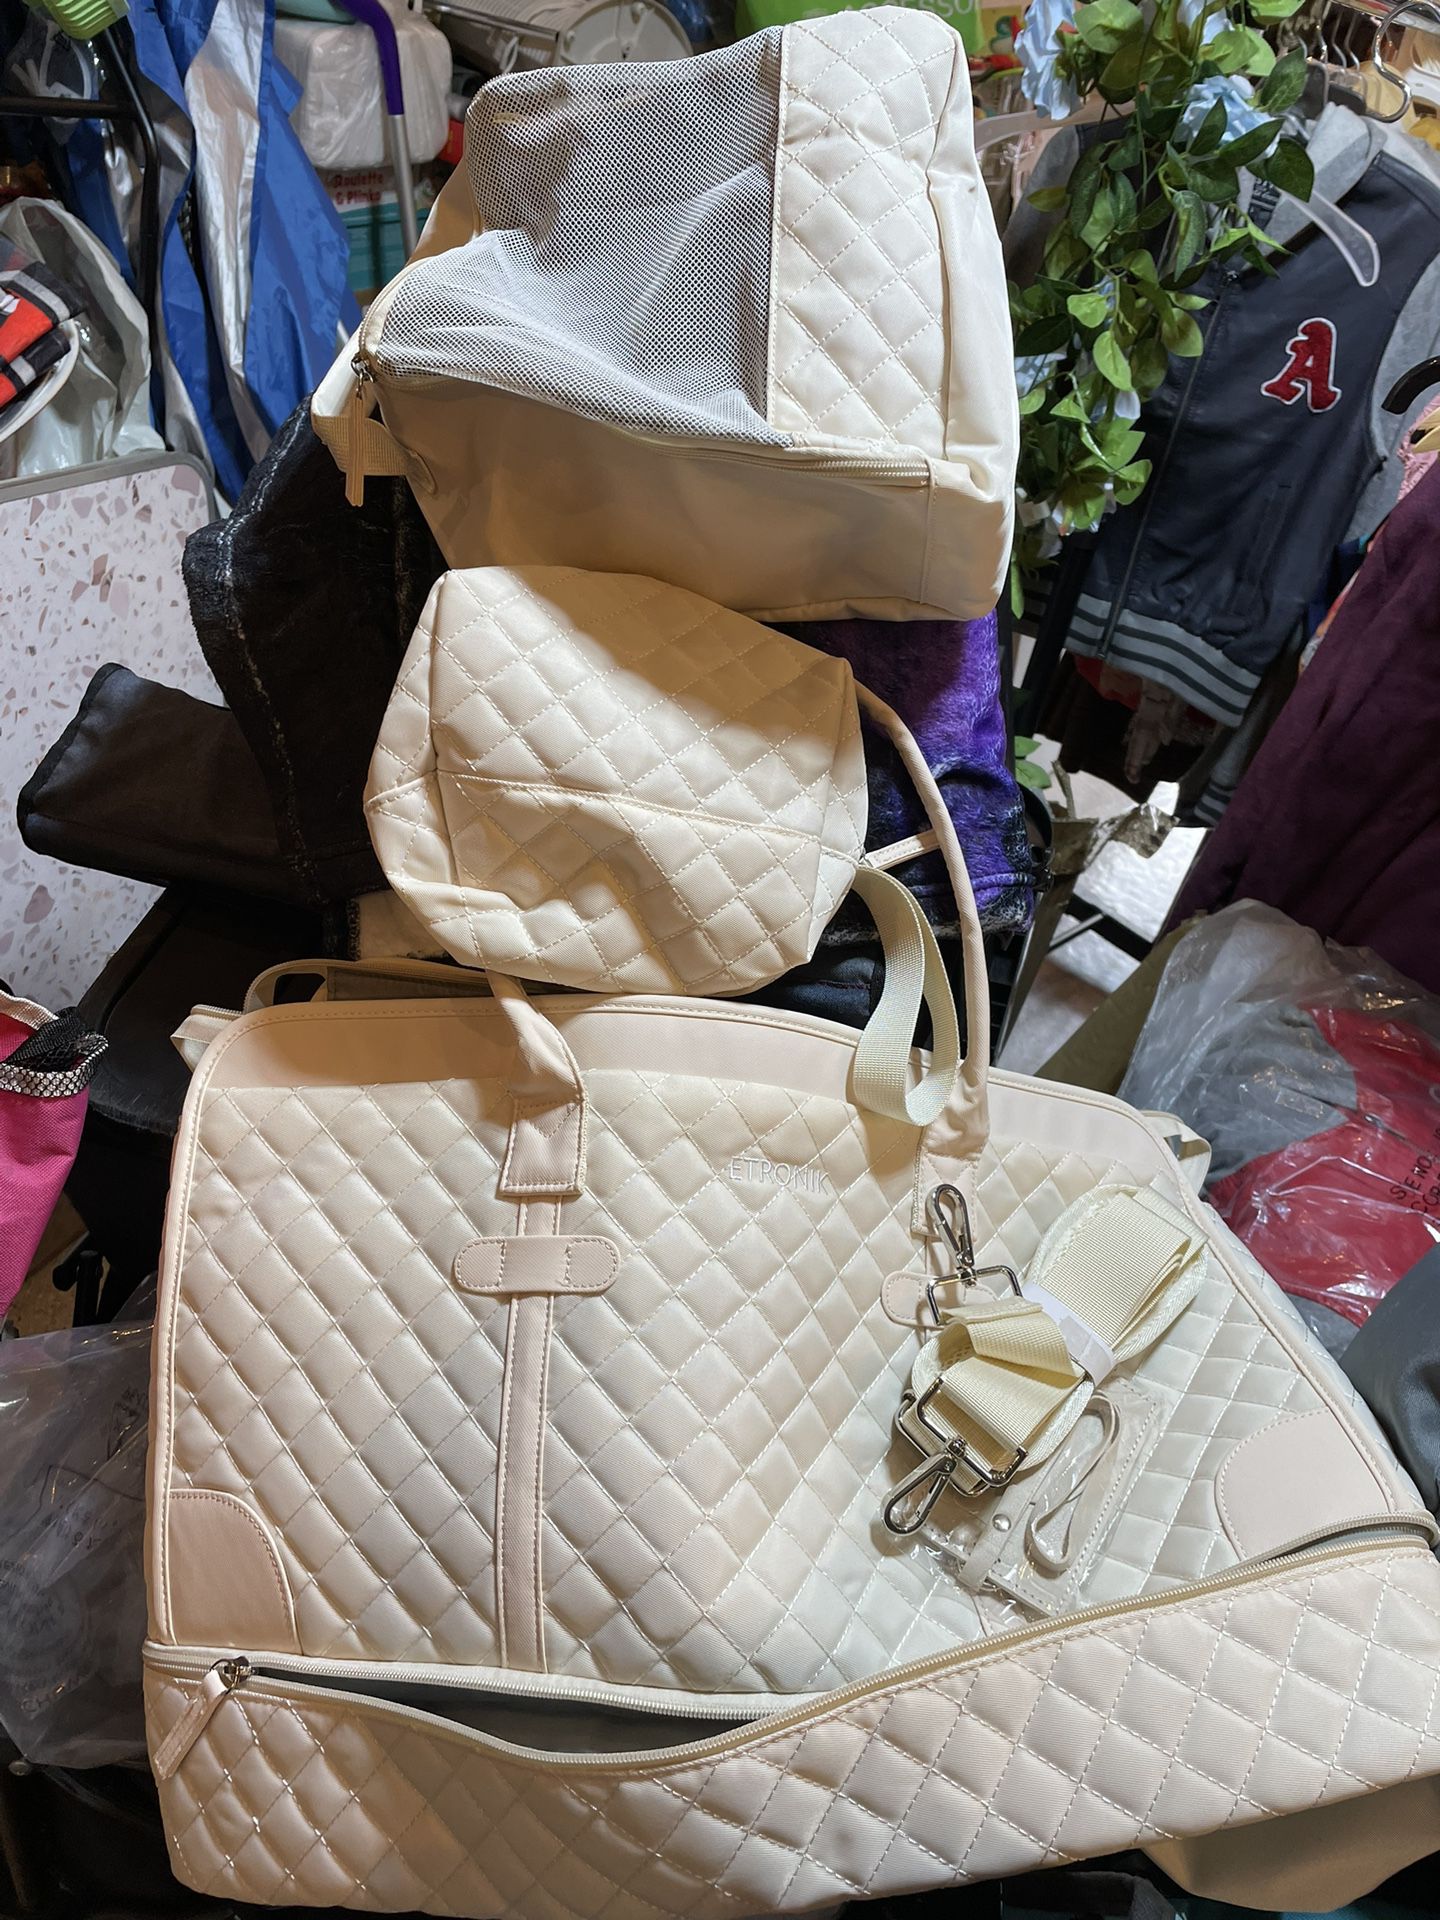 ETRONIK Weekender Bags for Women, Overnight Bag